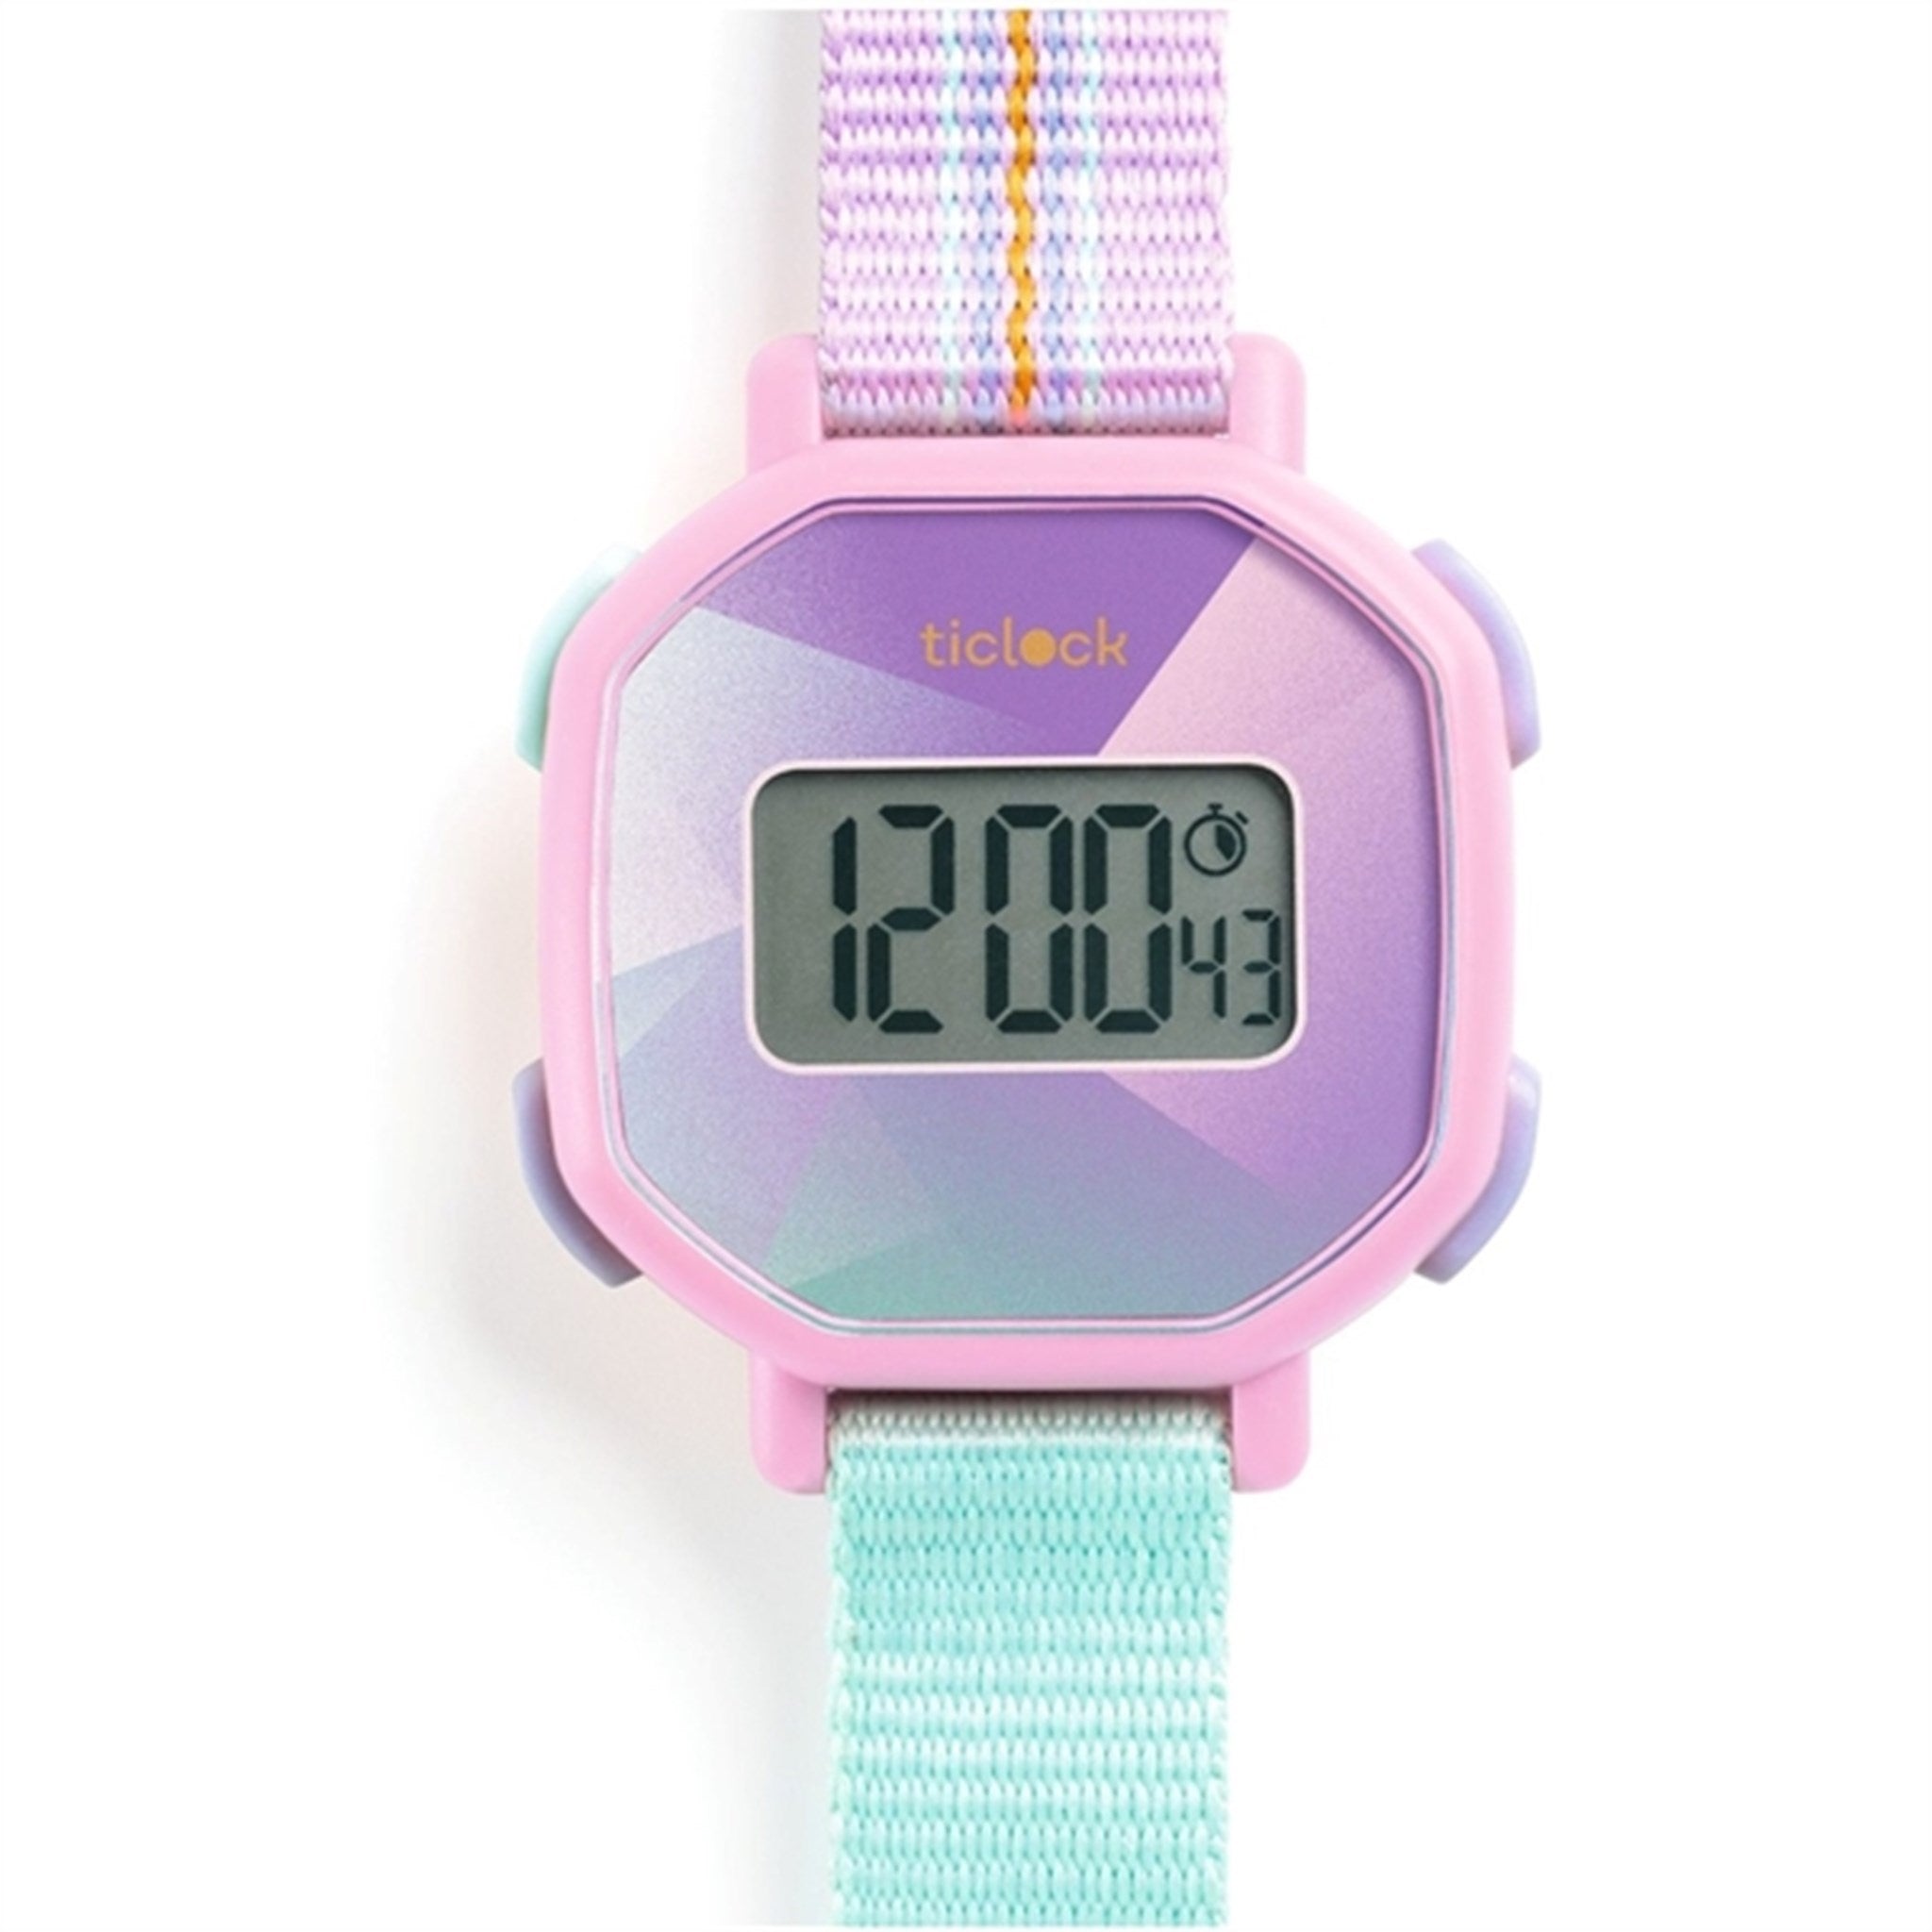 Djeco Ticlock Digital Watch Purple Prisma 2